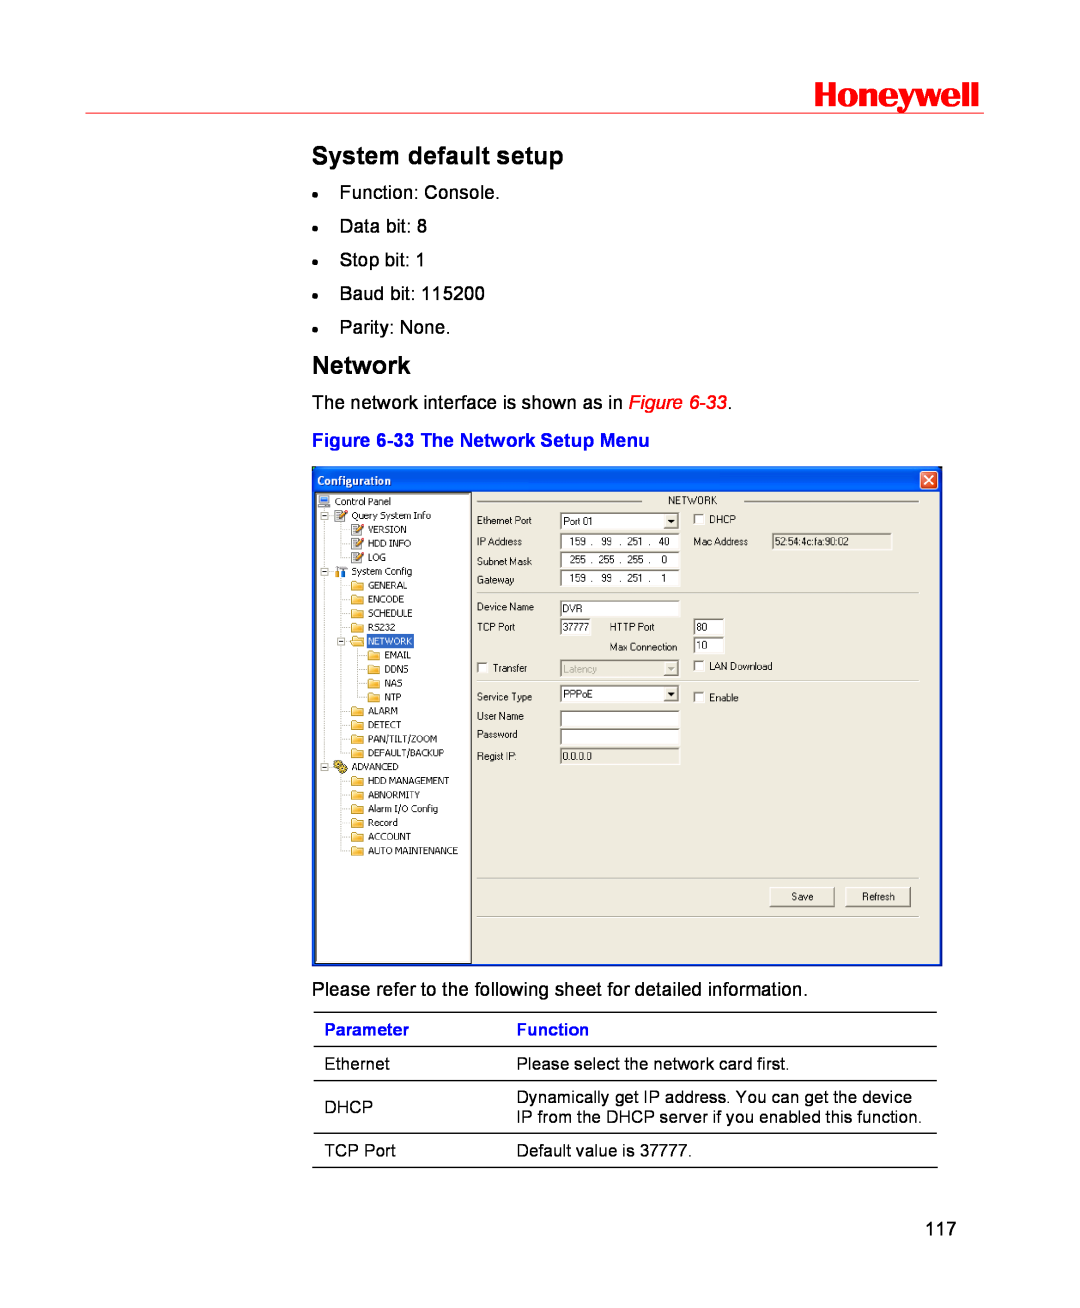 Honeywell HSVR-16, HSVR-04 user manual System default setup, Honeywell, 33 The Network Setup Menu, Parameter, Function 